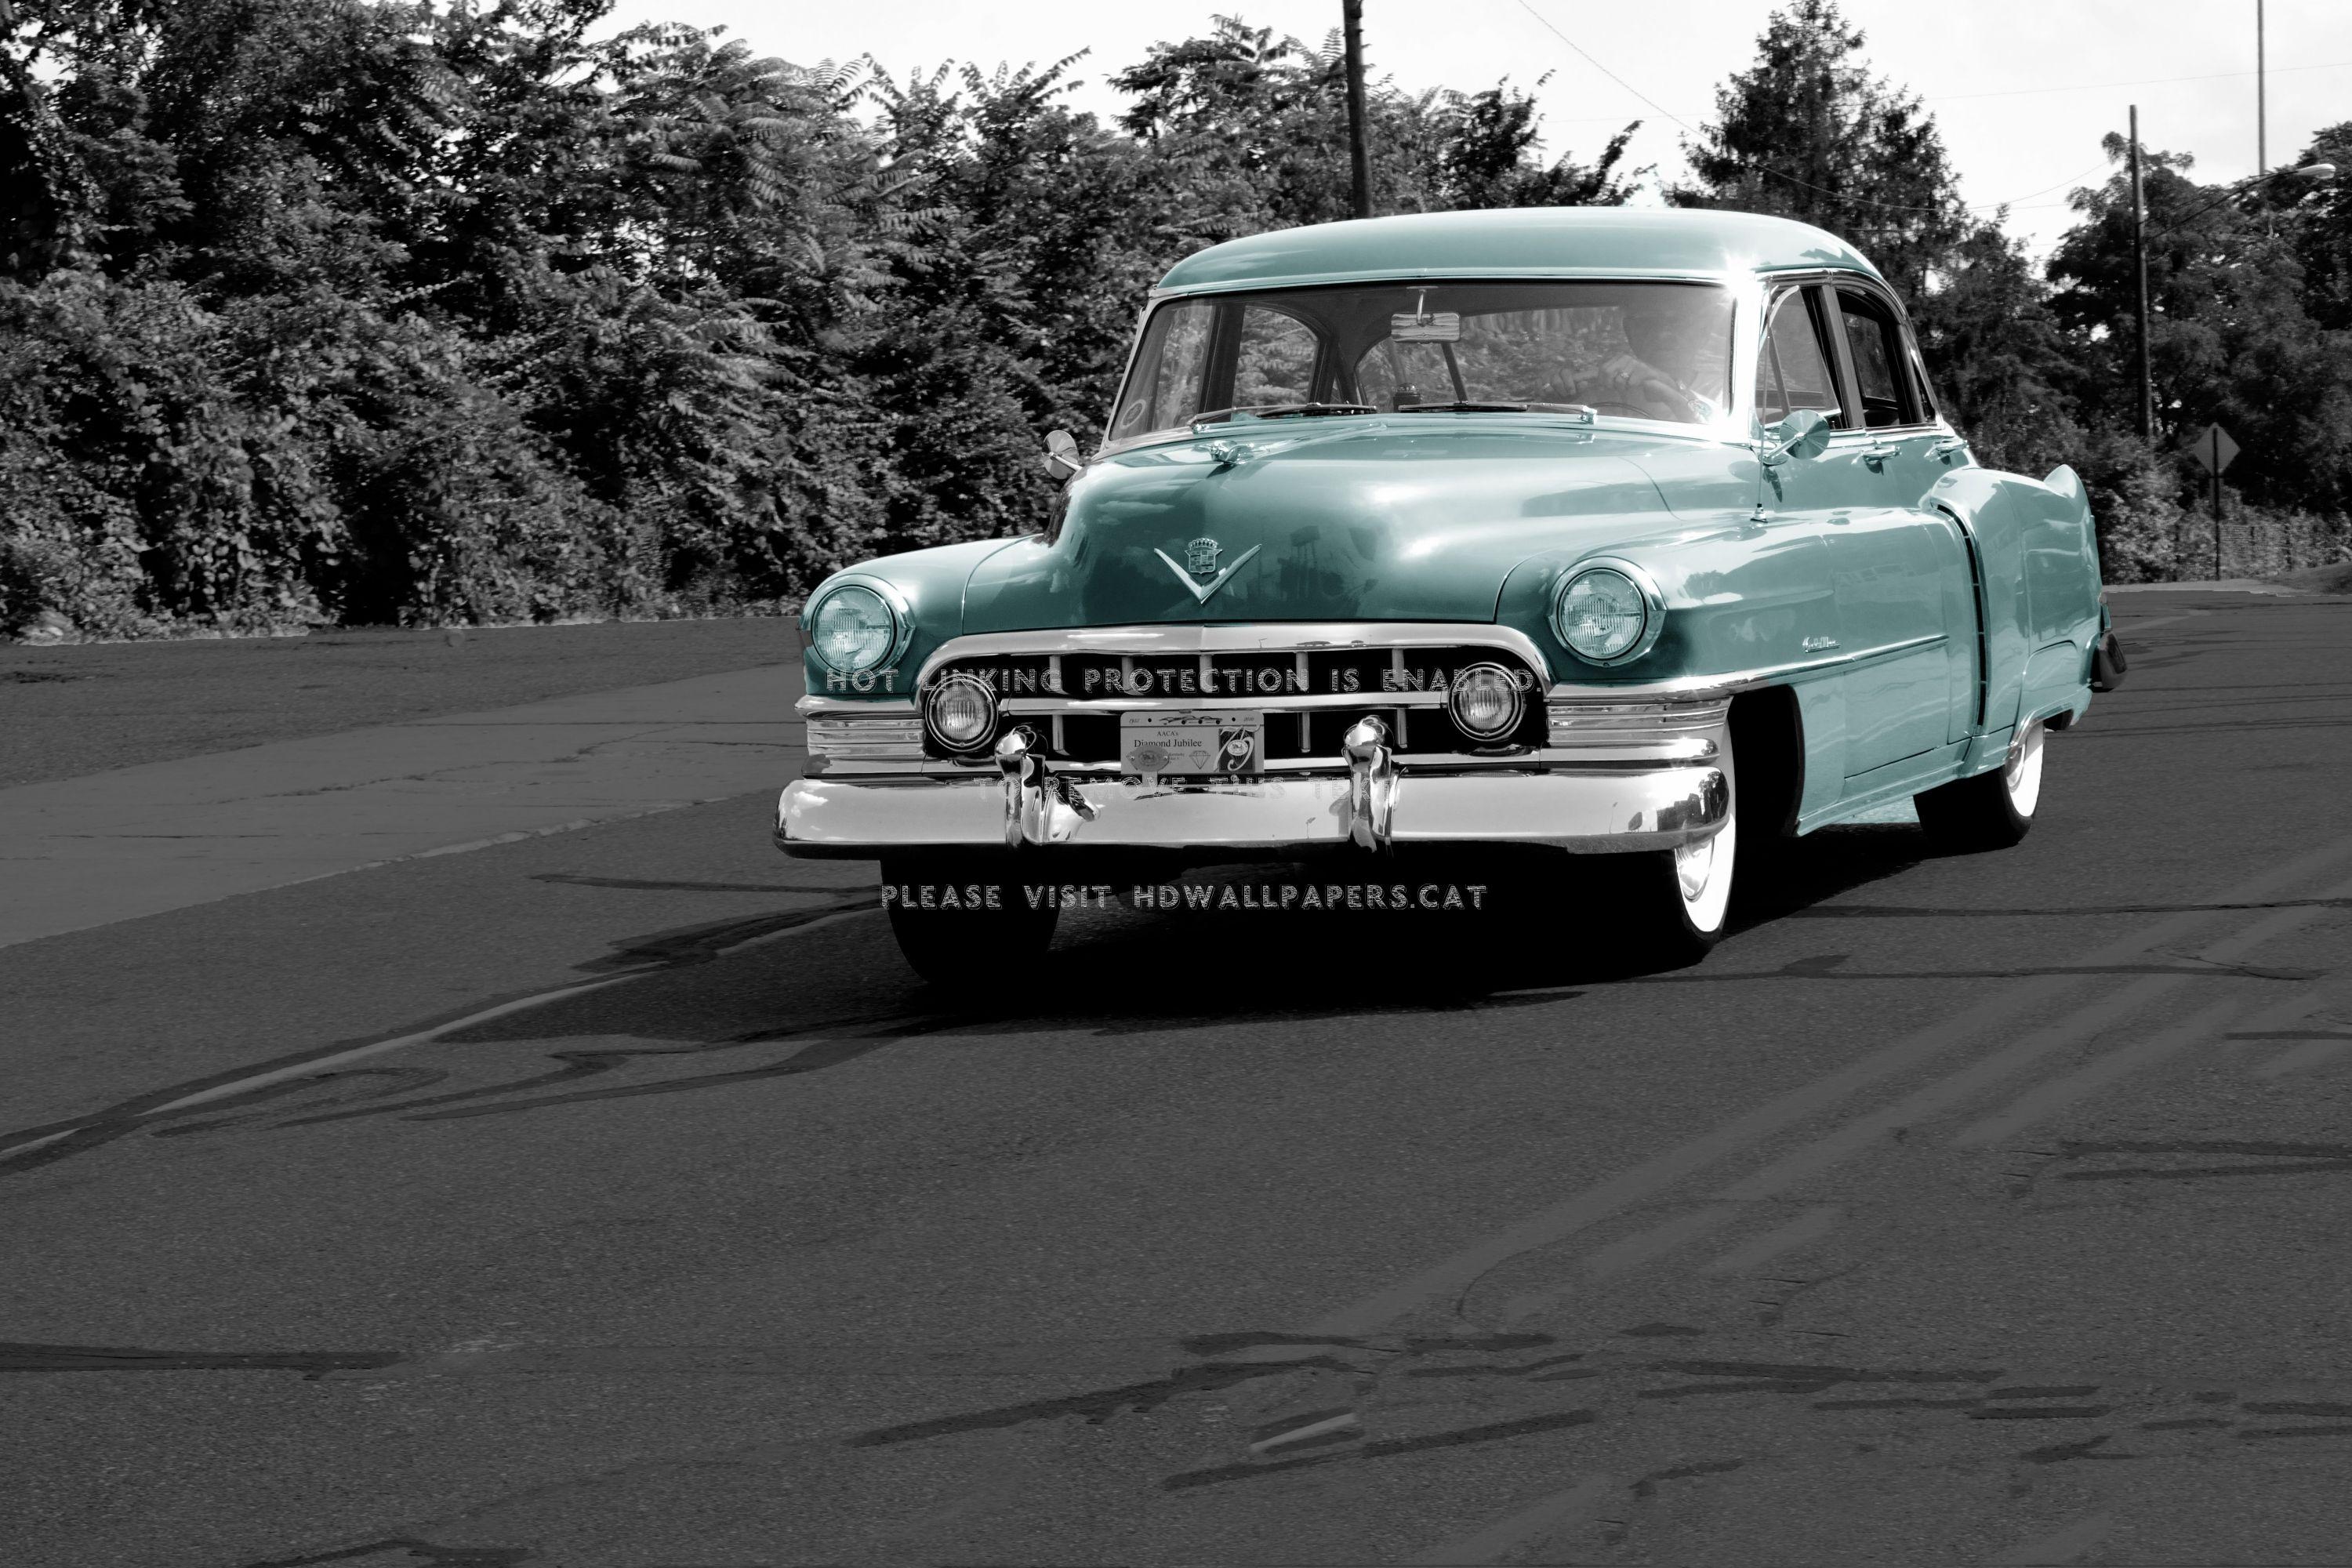 an american classic vintage cadillac car